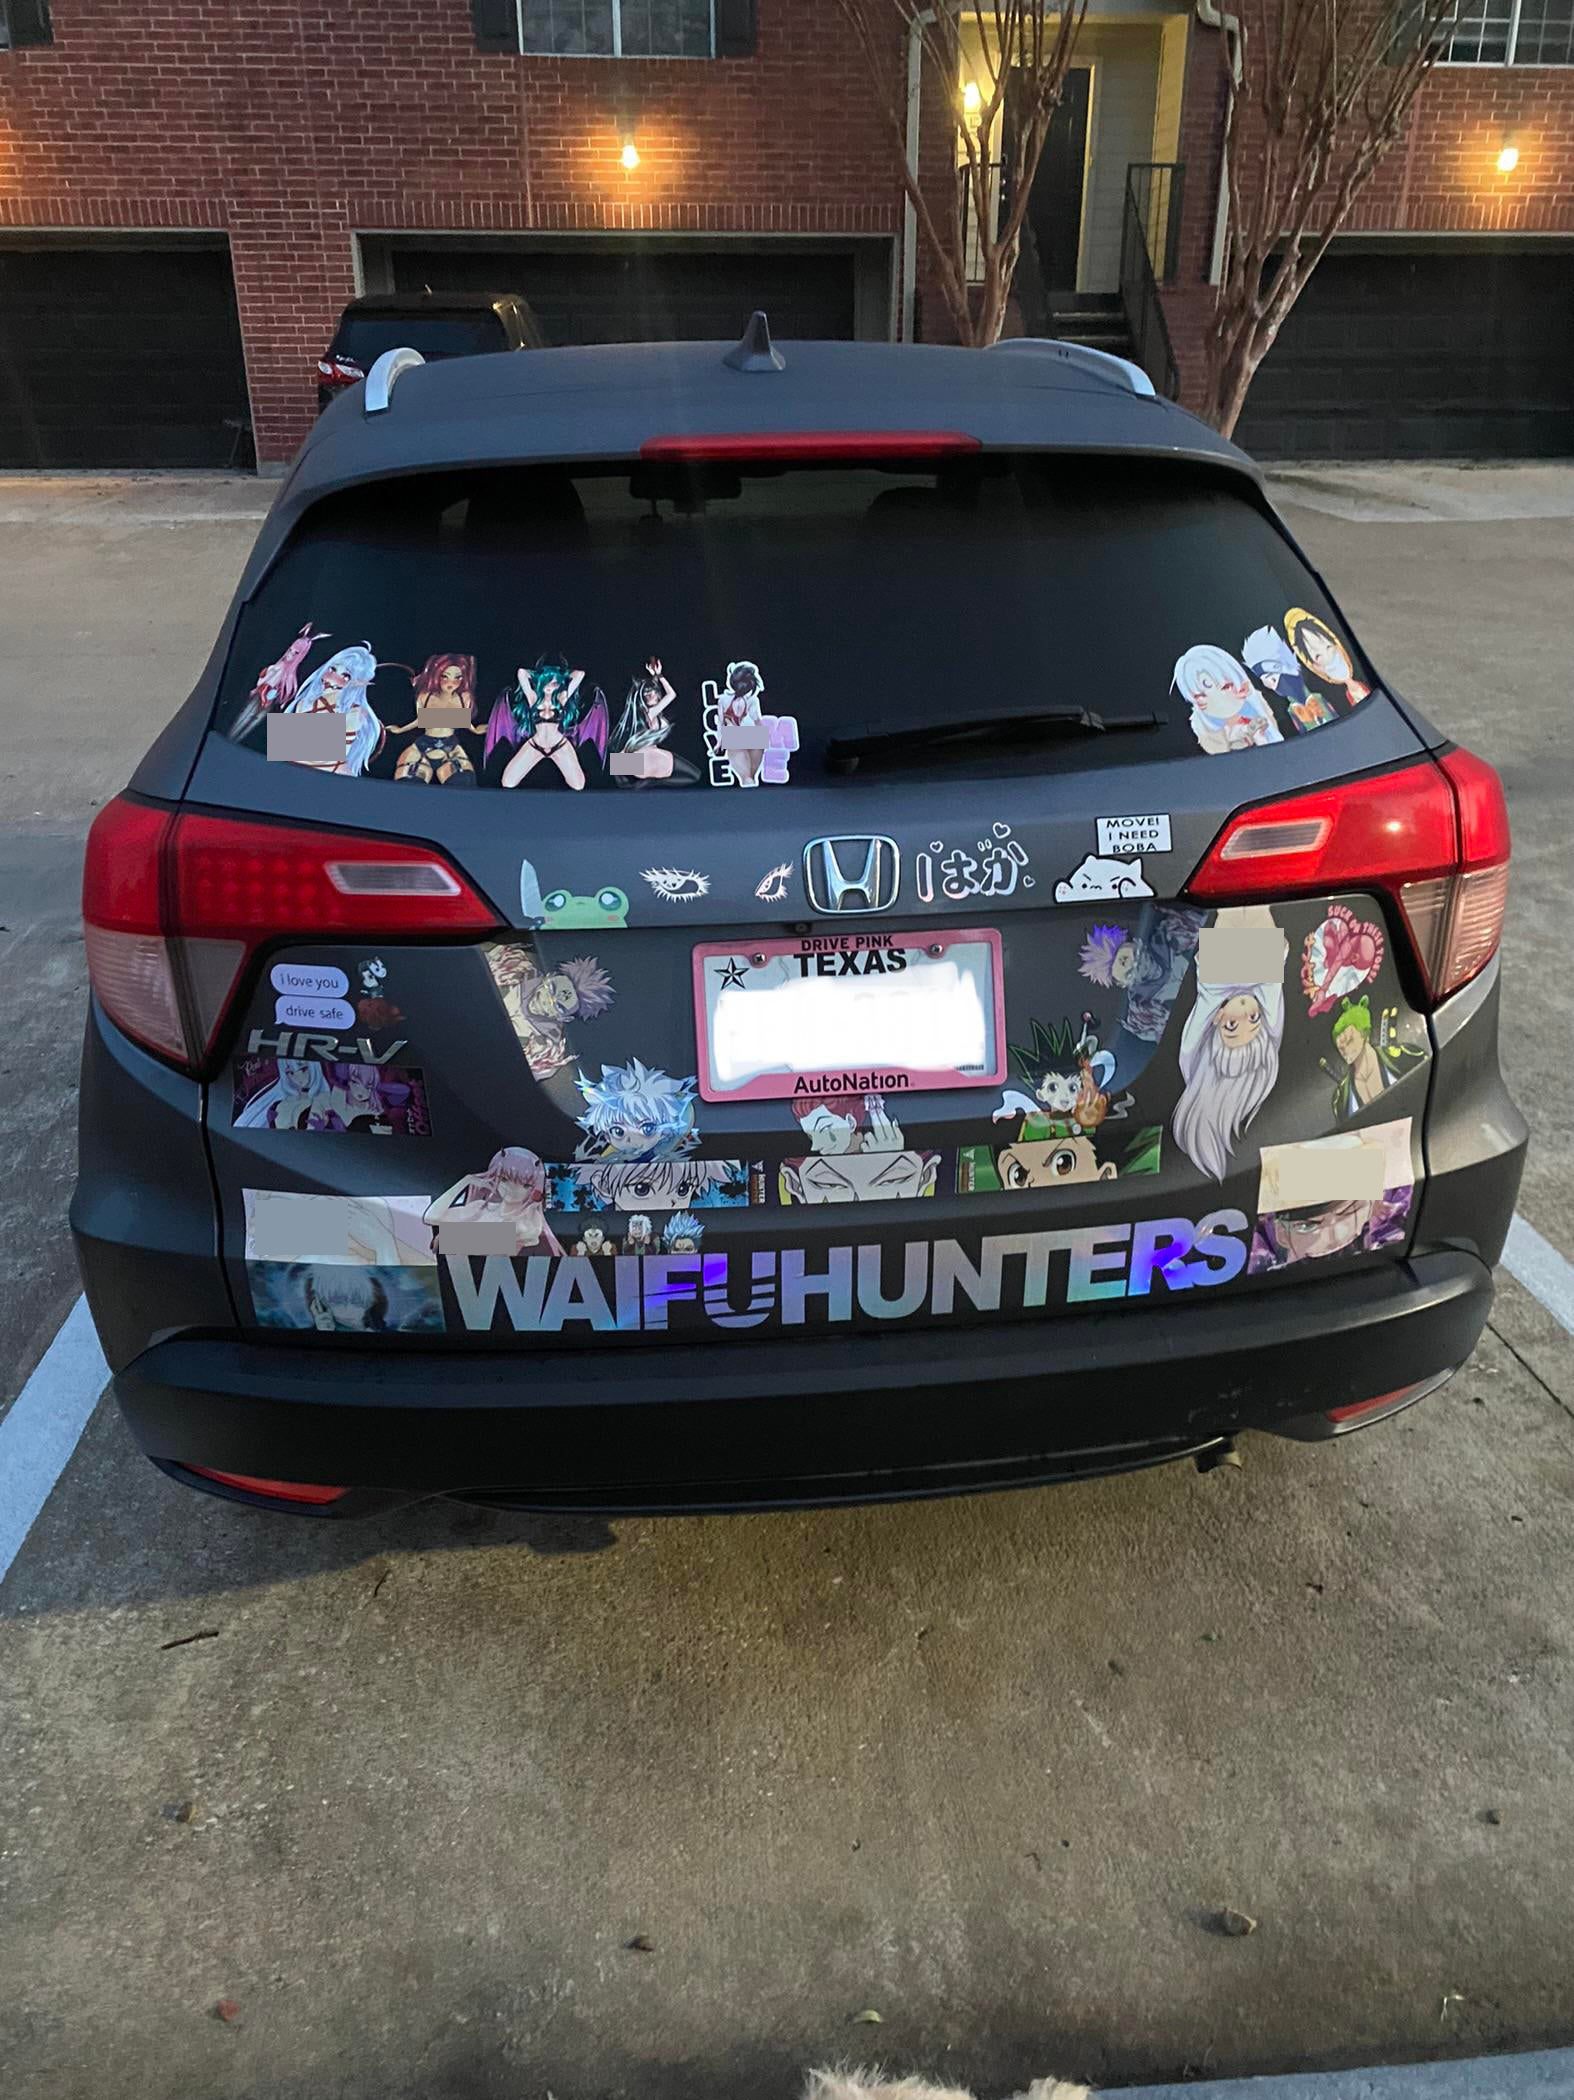 vehicle registration plate - Texas Hr. Wafuhunters